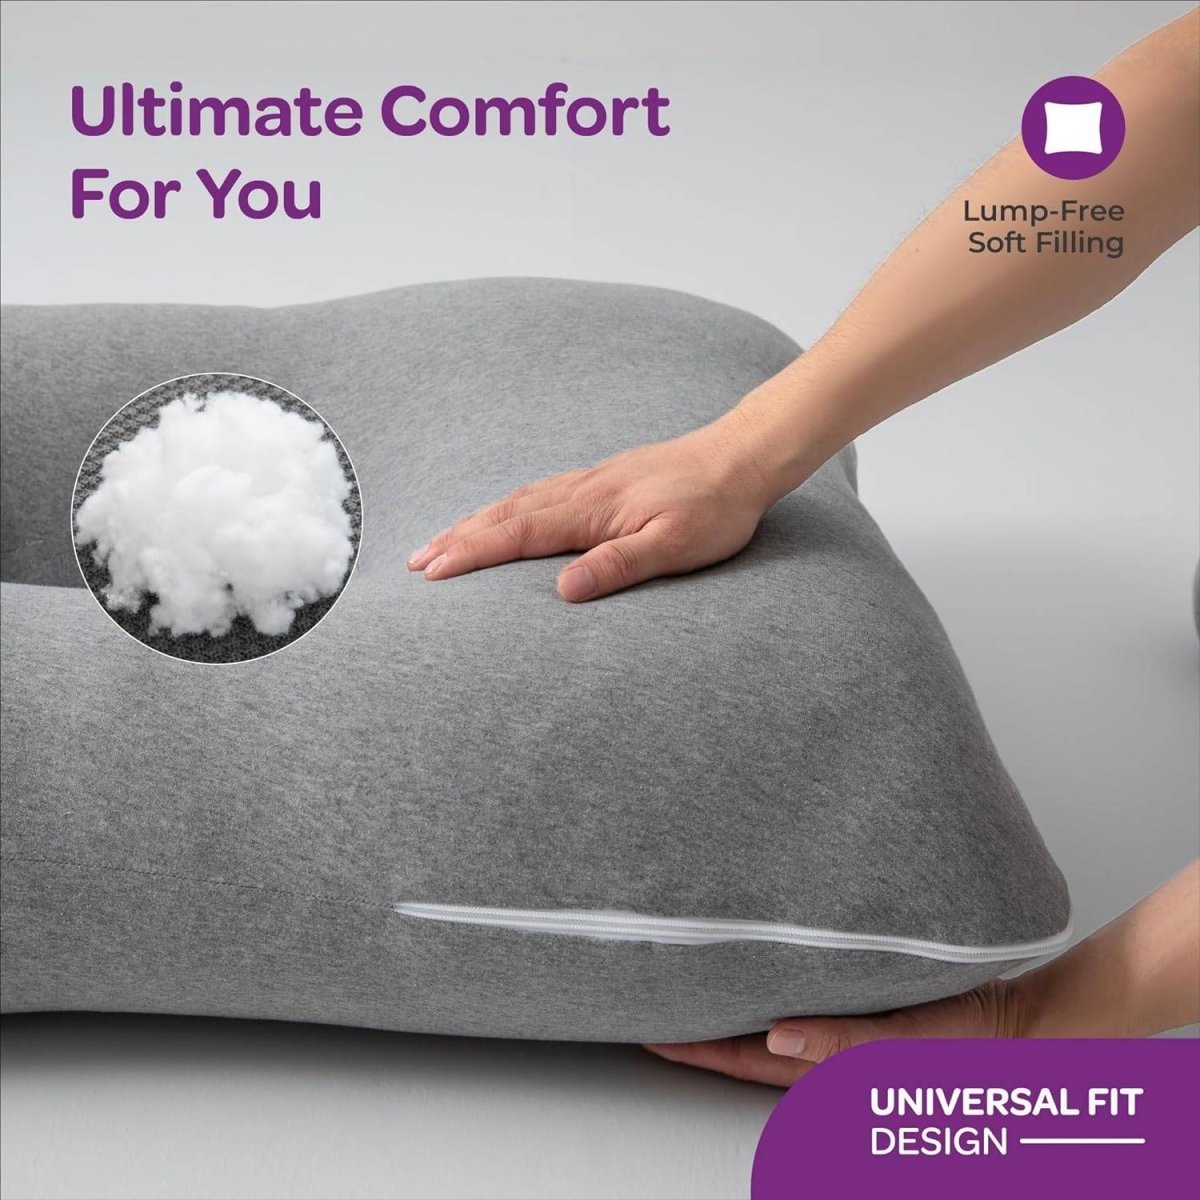 Moon Organic U Shaped Contour Maternity Pillow Maternity Accessories Lite Grey Adult - MNSMPMT8